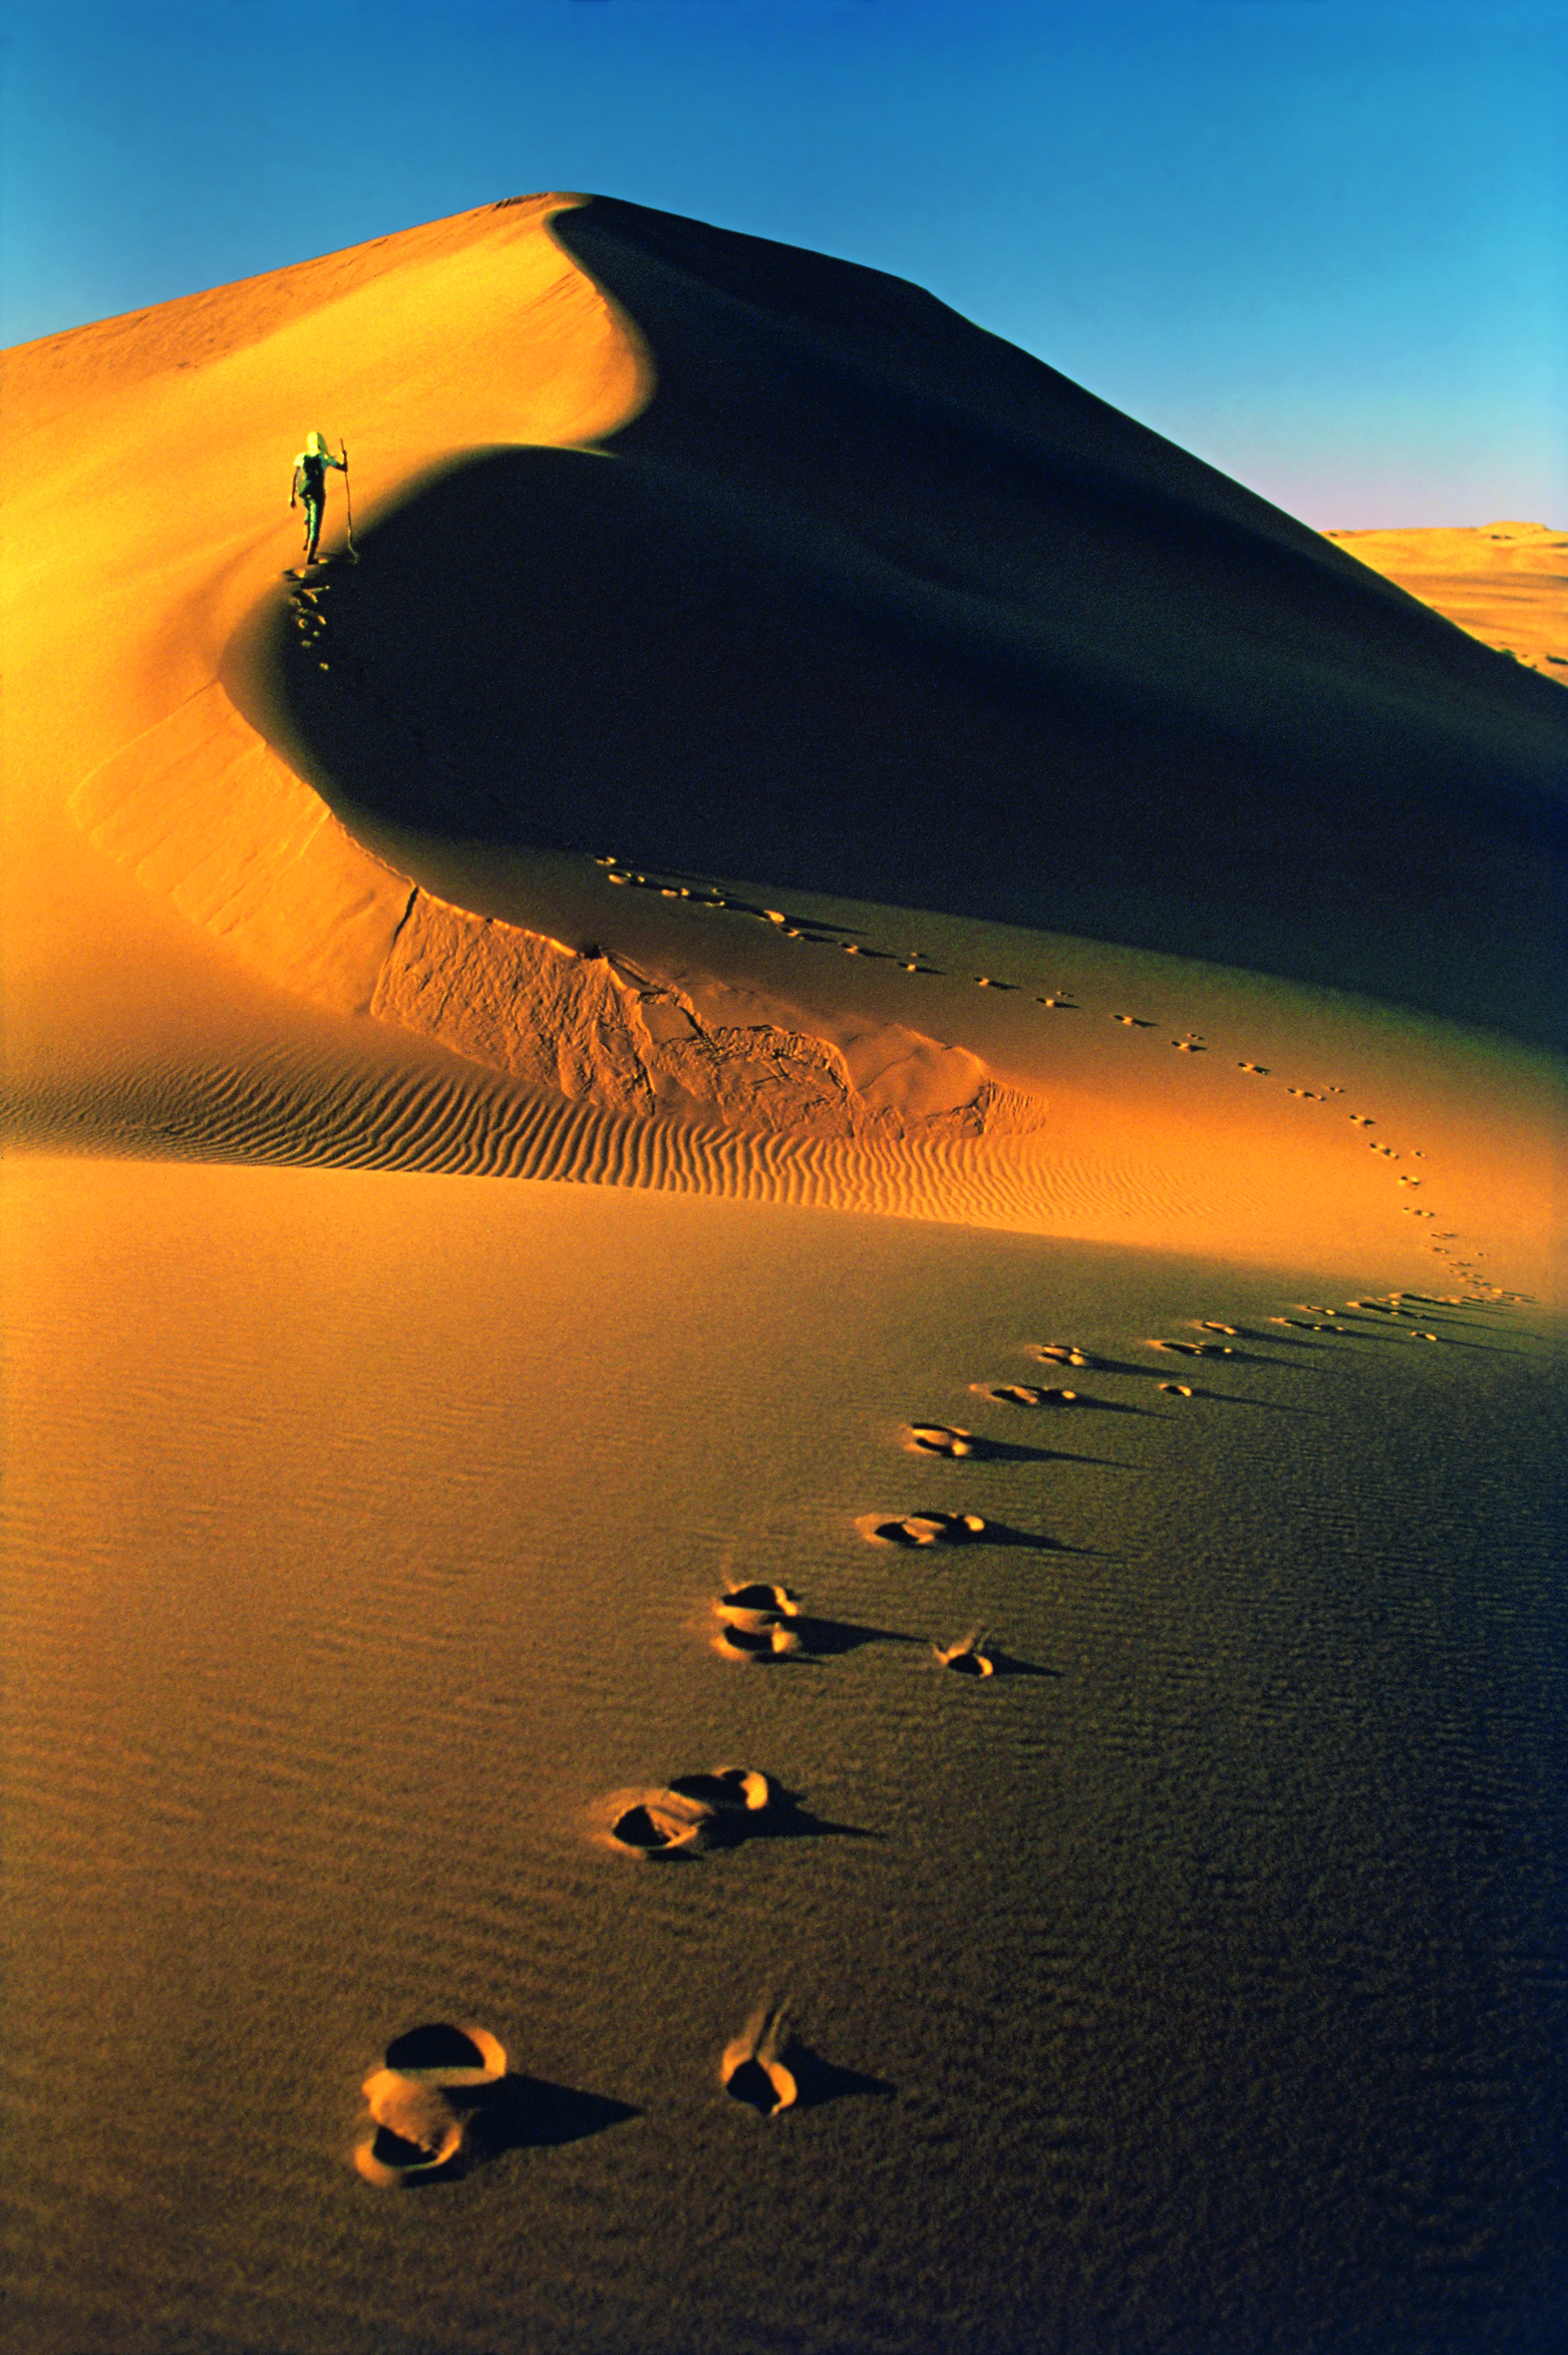 Walter Bonatti, Deserto del Namib, Namibia. AprileMaggio 1972, ©Walter Bonatti/Contrasto